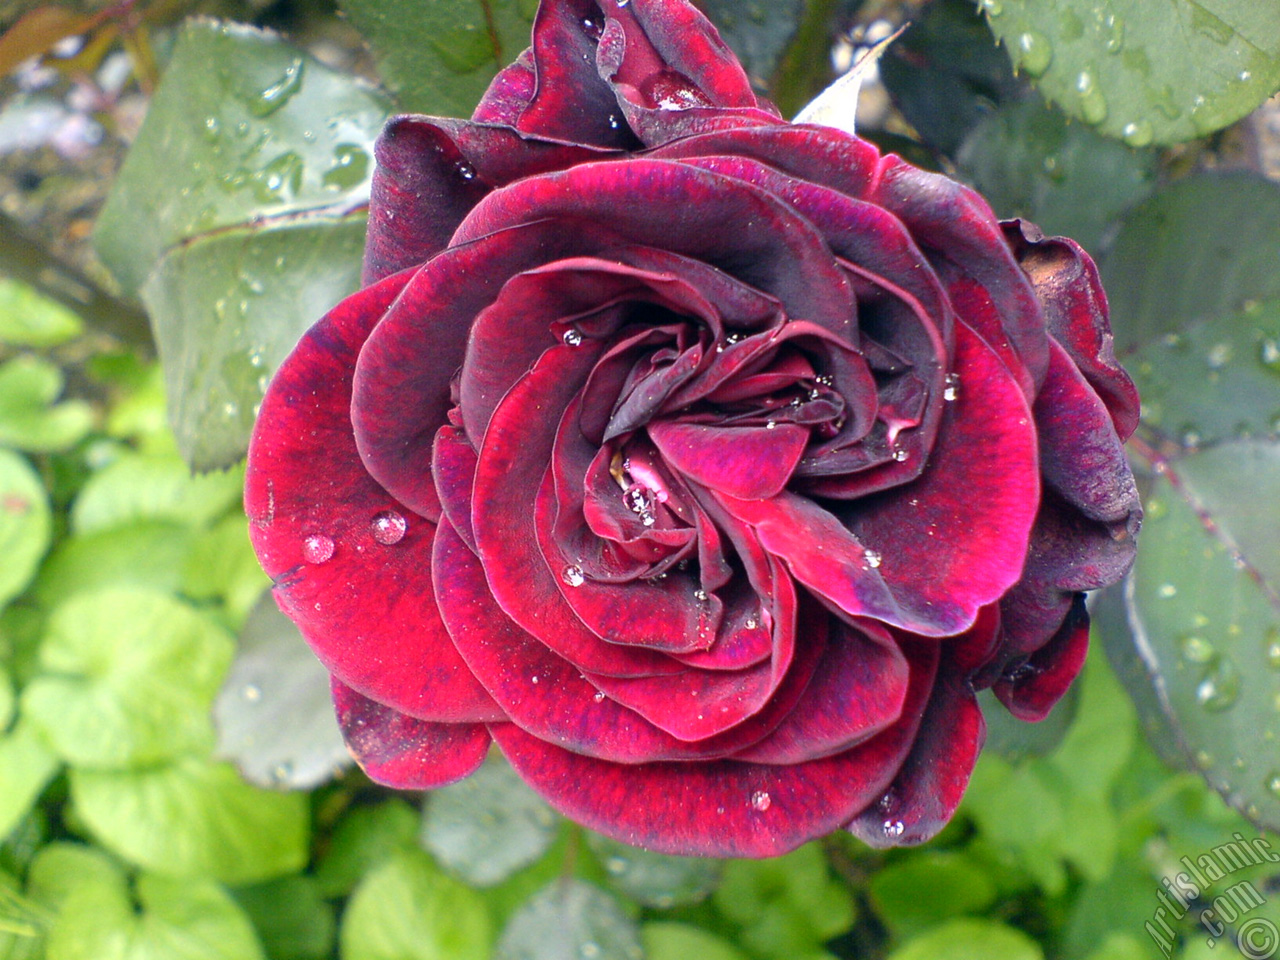 Burgundy Color rose photo.
